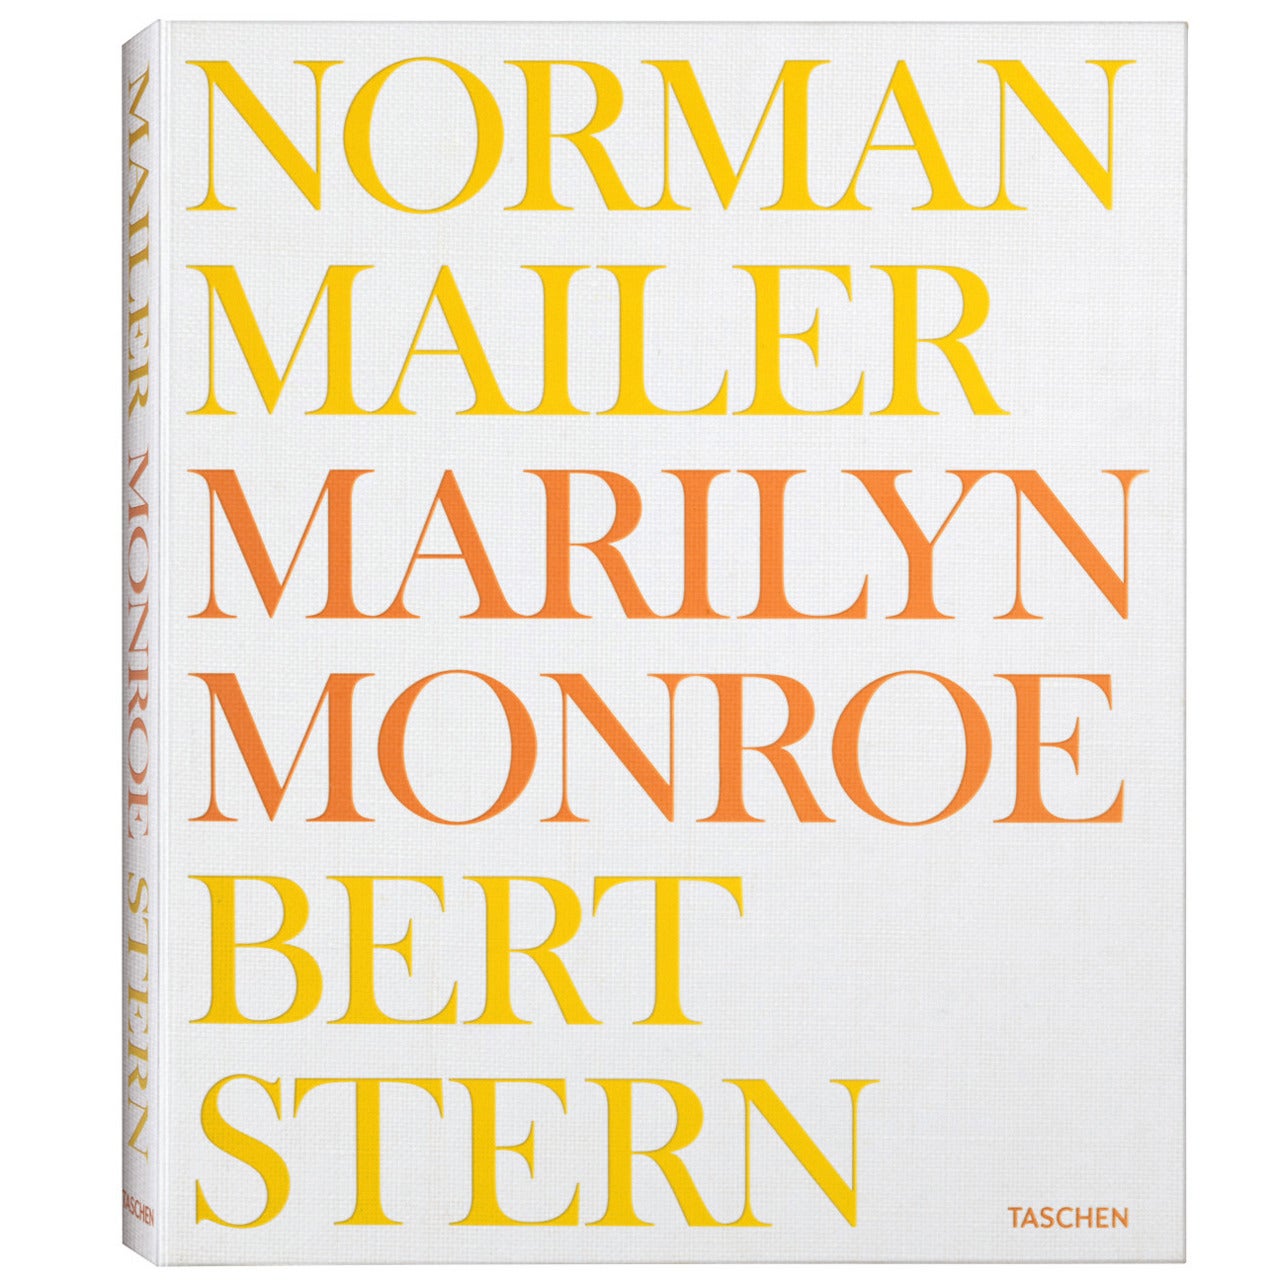 Norman Mailer/Bert Stern, Marilyn Monroe